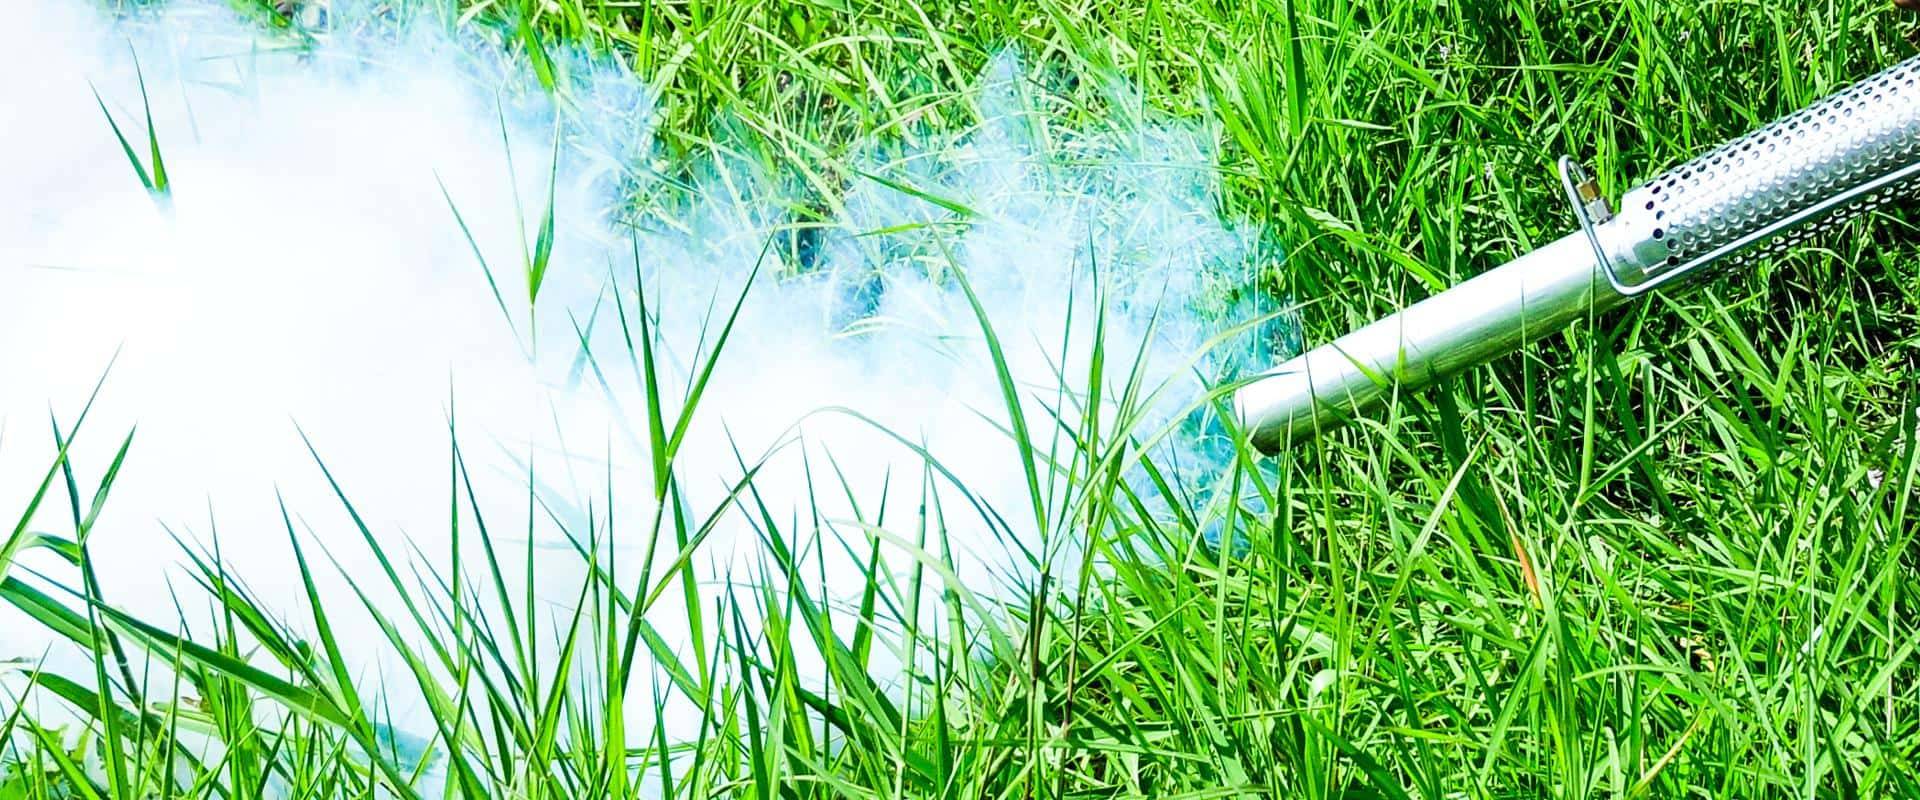 mosquito fog on grass